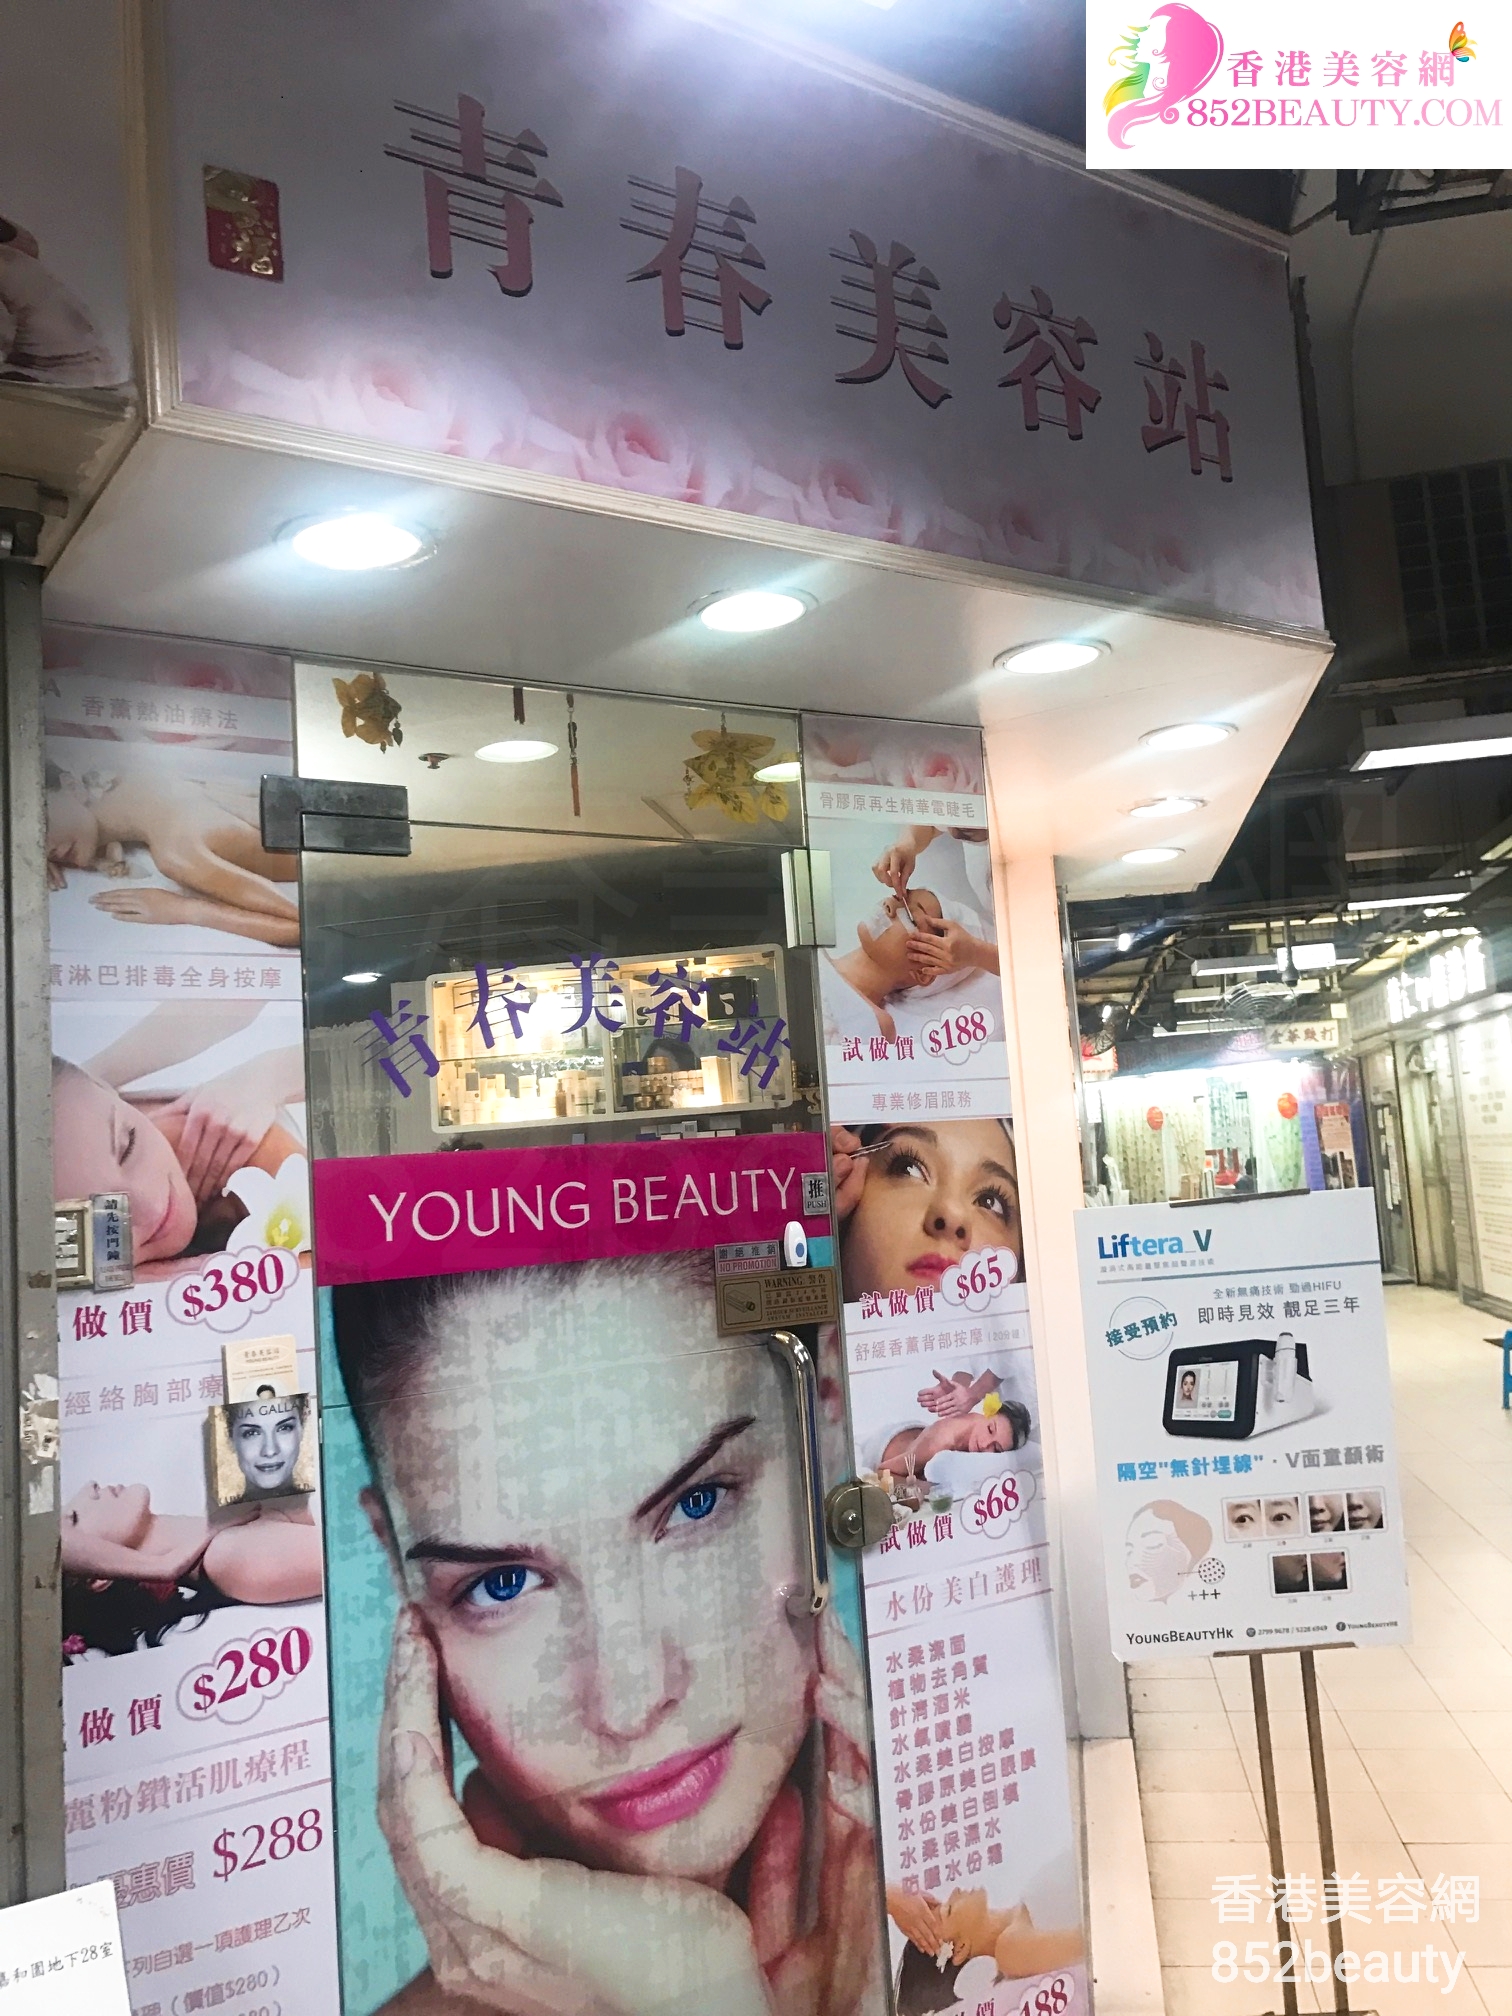 美容院 Beauty Salon: 青春美容站 Young Beauty